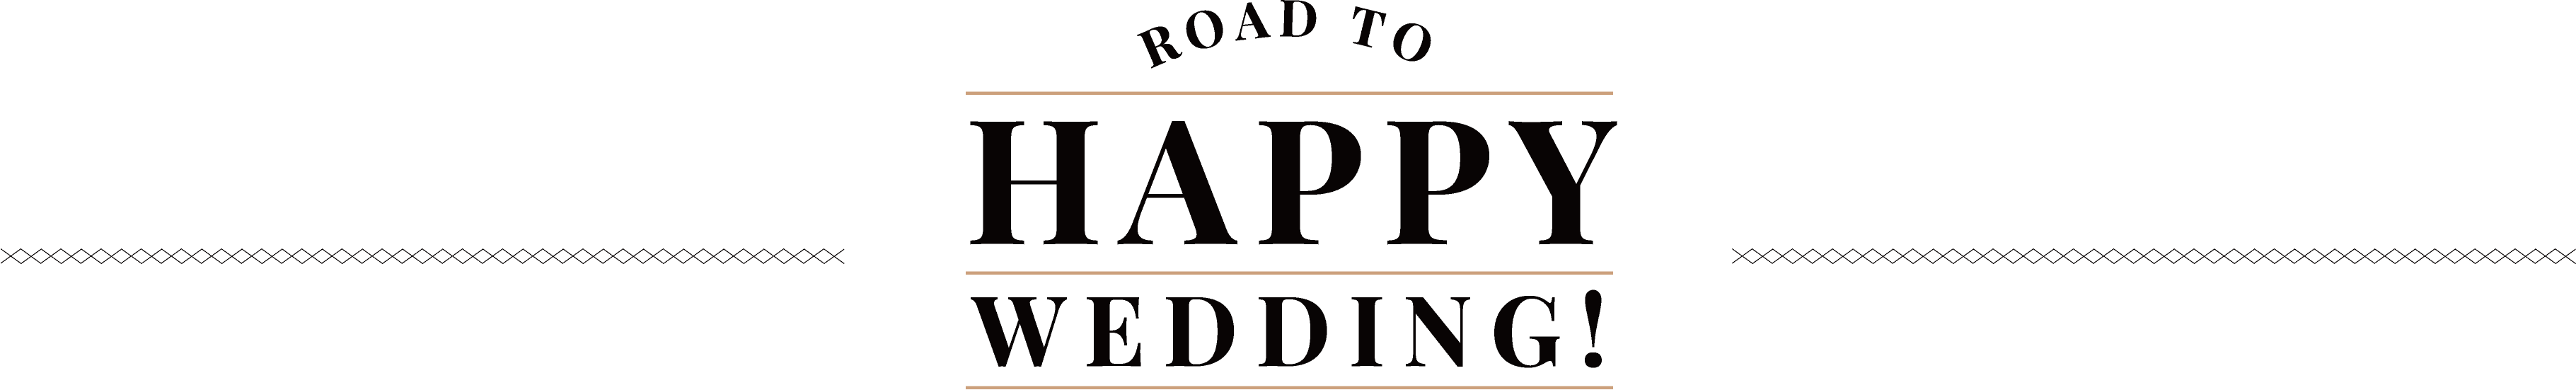 ROAD TO HAPPY WEDDING!